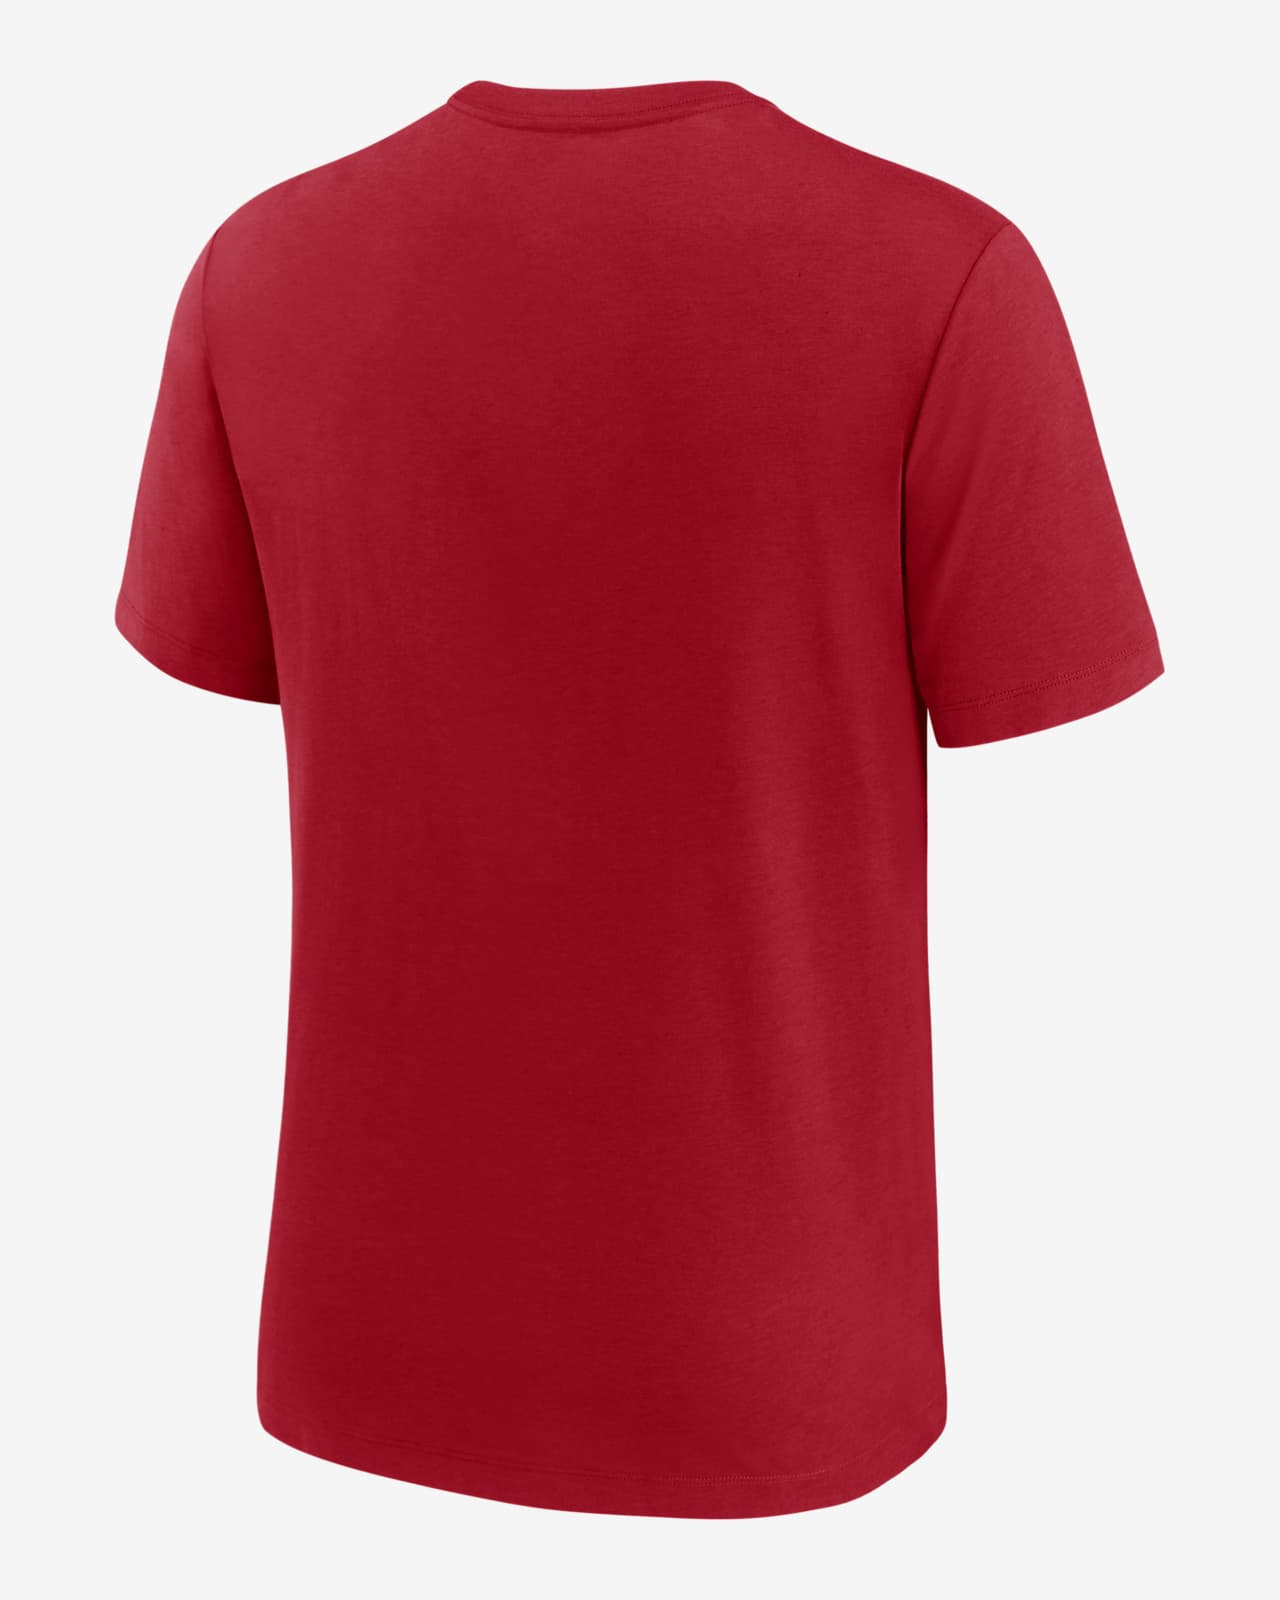 Nike Rewind Retro (MLB California Angels) Men's T-Shirt